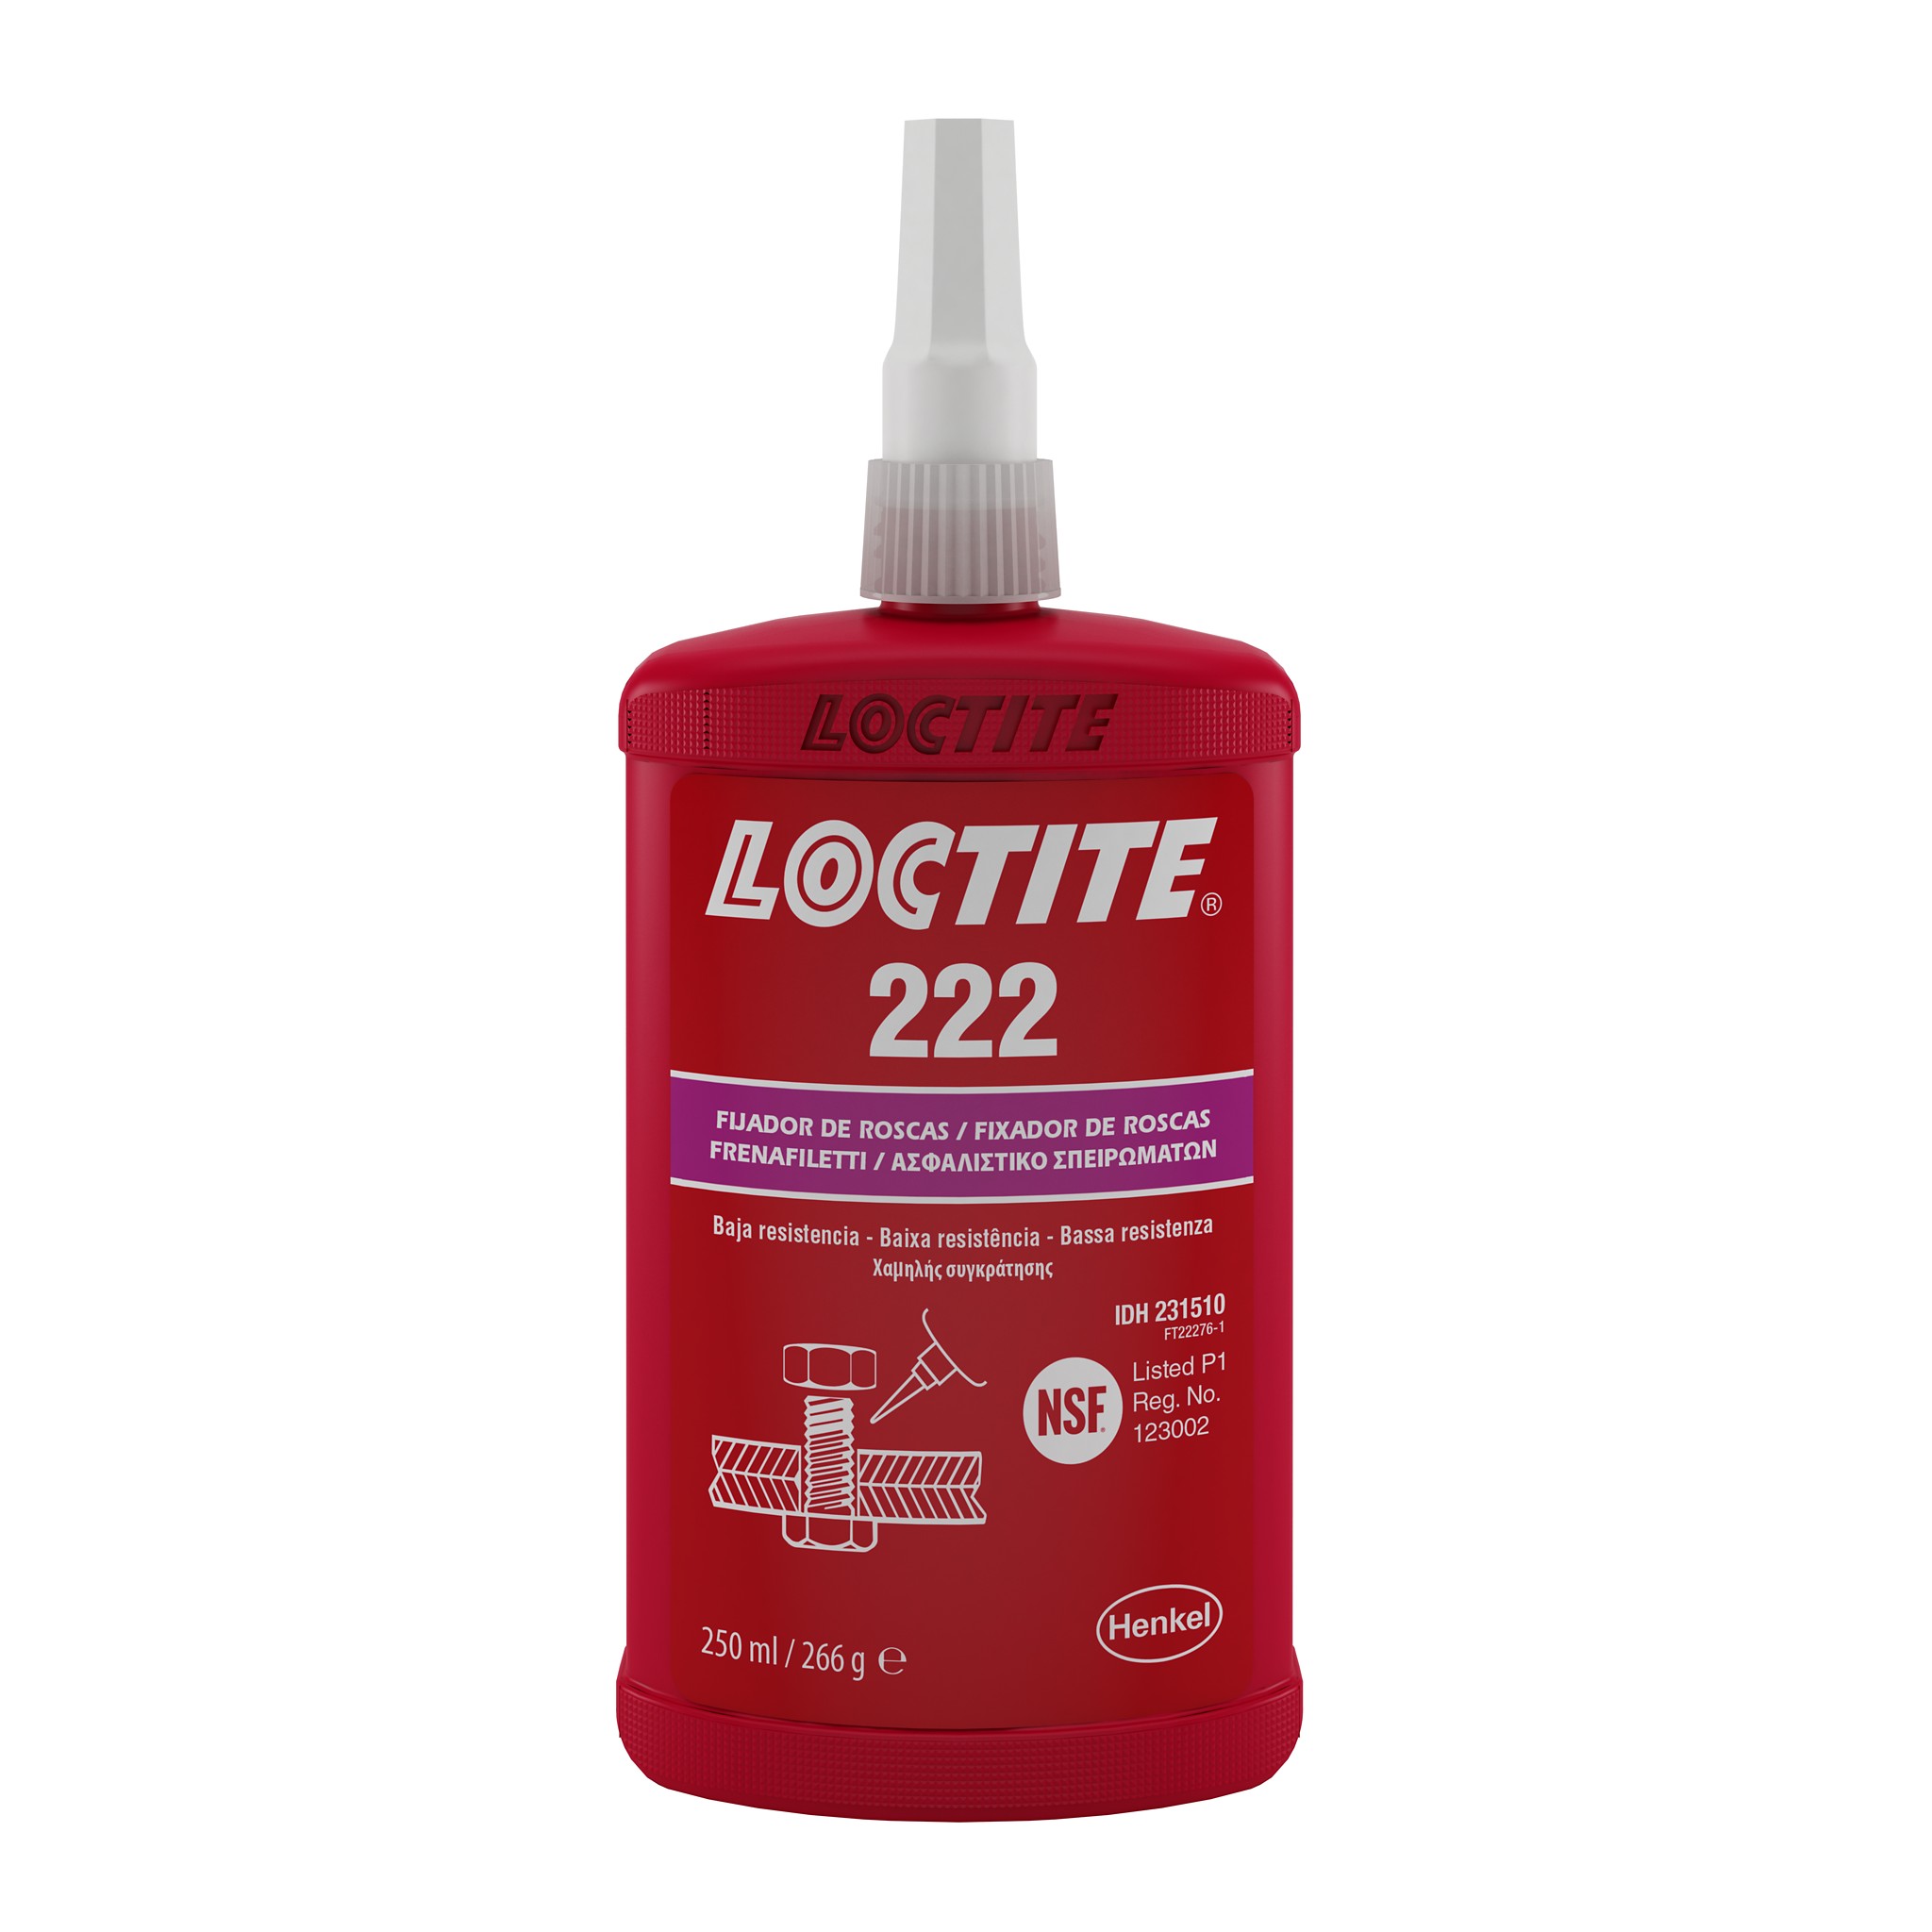 LOCTITE 222 - Frenafiletti a bassa resistenza - Henkel Adhesives